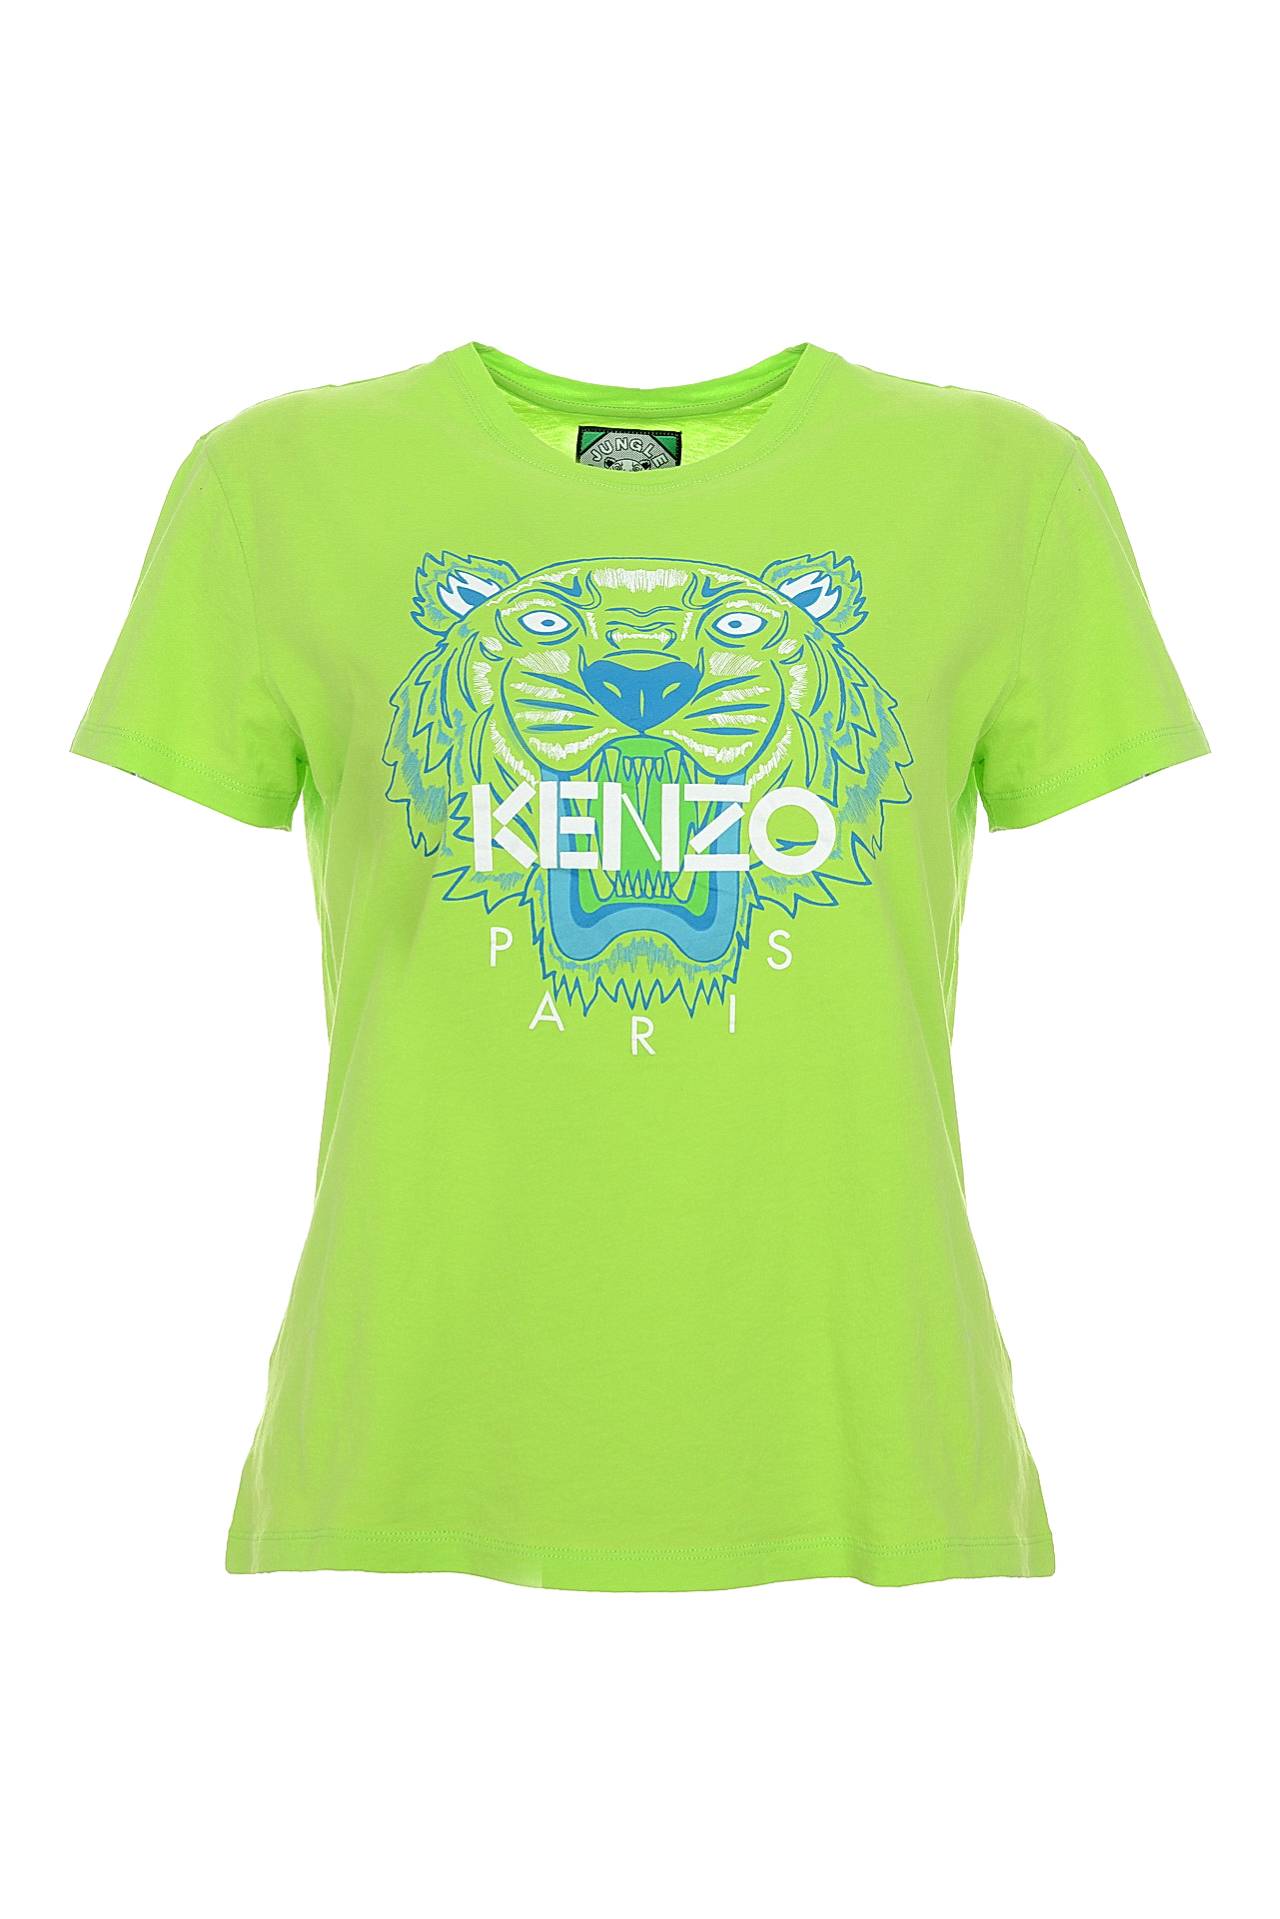 Одежда женская Футболка KENZO (F552TS7214YO/15.2). Купить за 7500 руб.